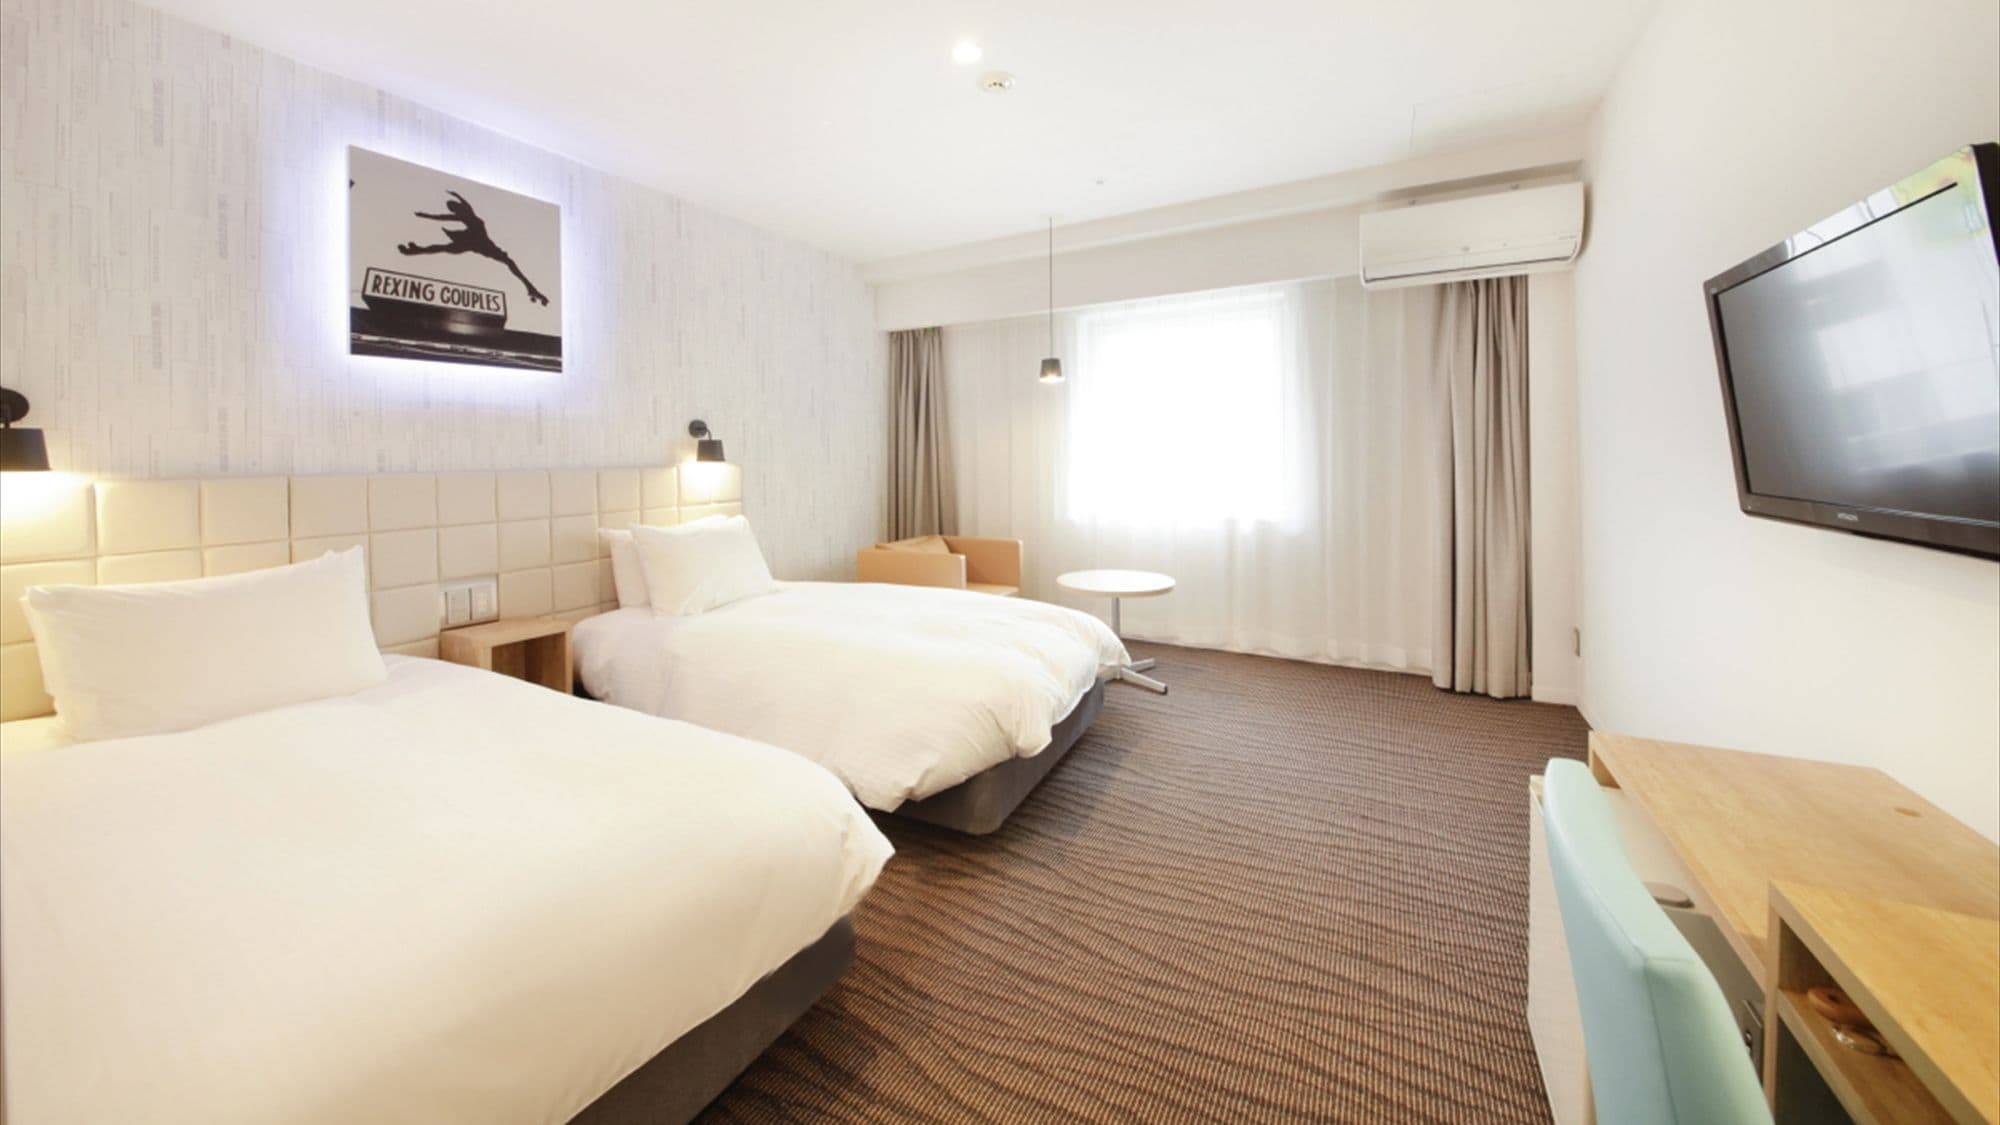 & rdquo; Sleeping Concierge & rdquo; Simmons beds around the world are comfortable to sleep in! Spacious 24㎡ SOHO twin room